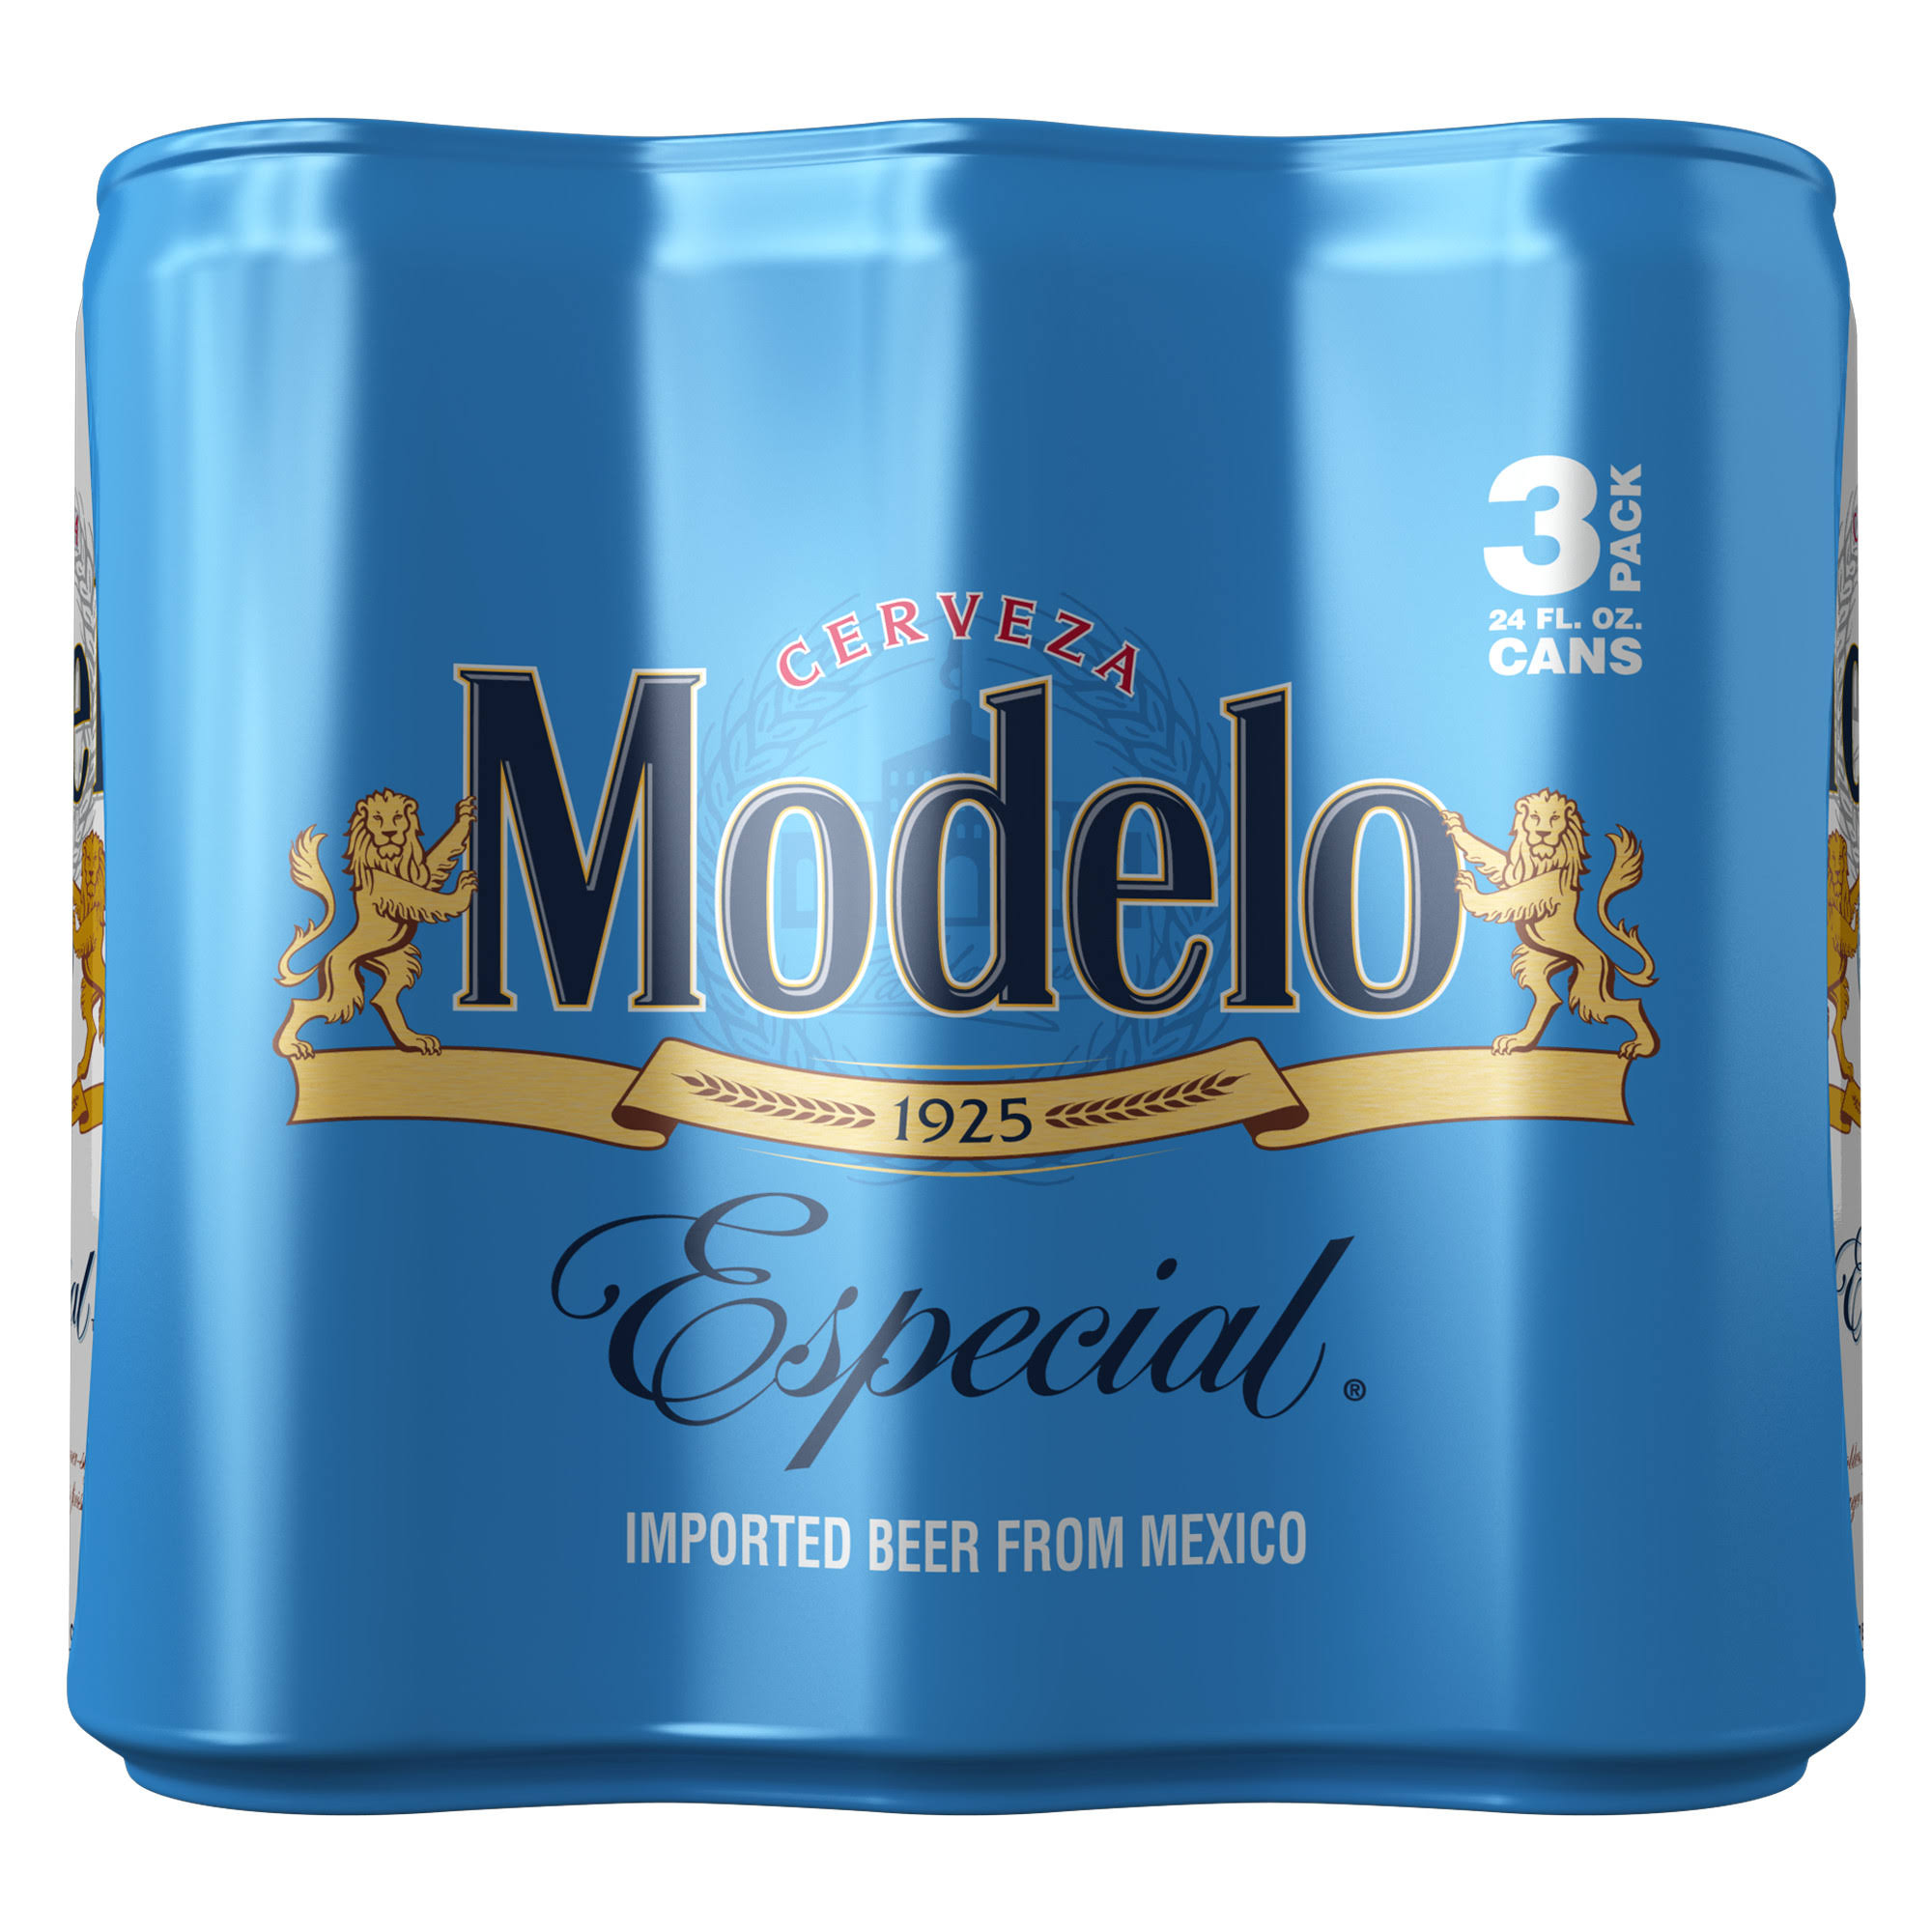 Modelo Especial Beer - 24oz, 3 Pack